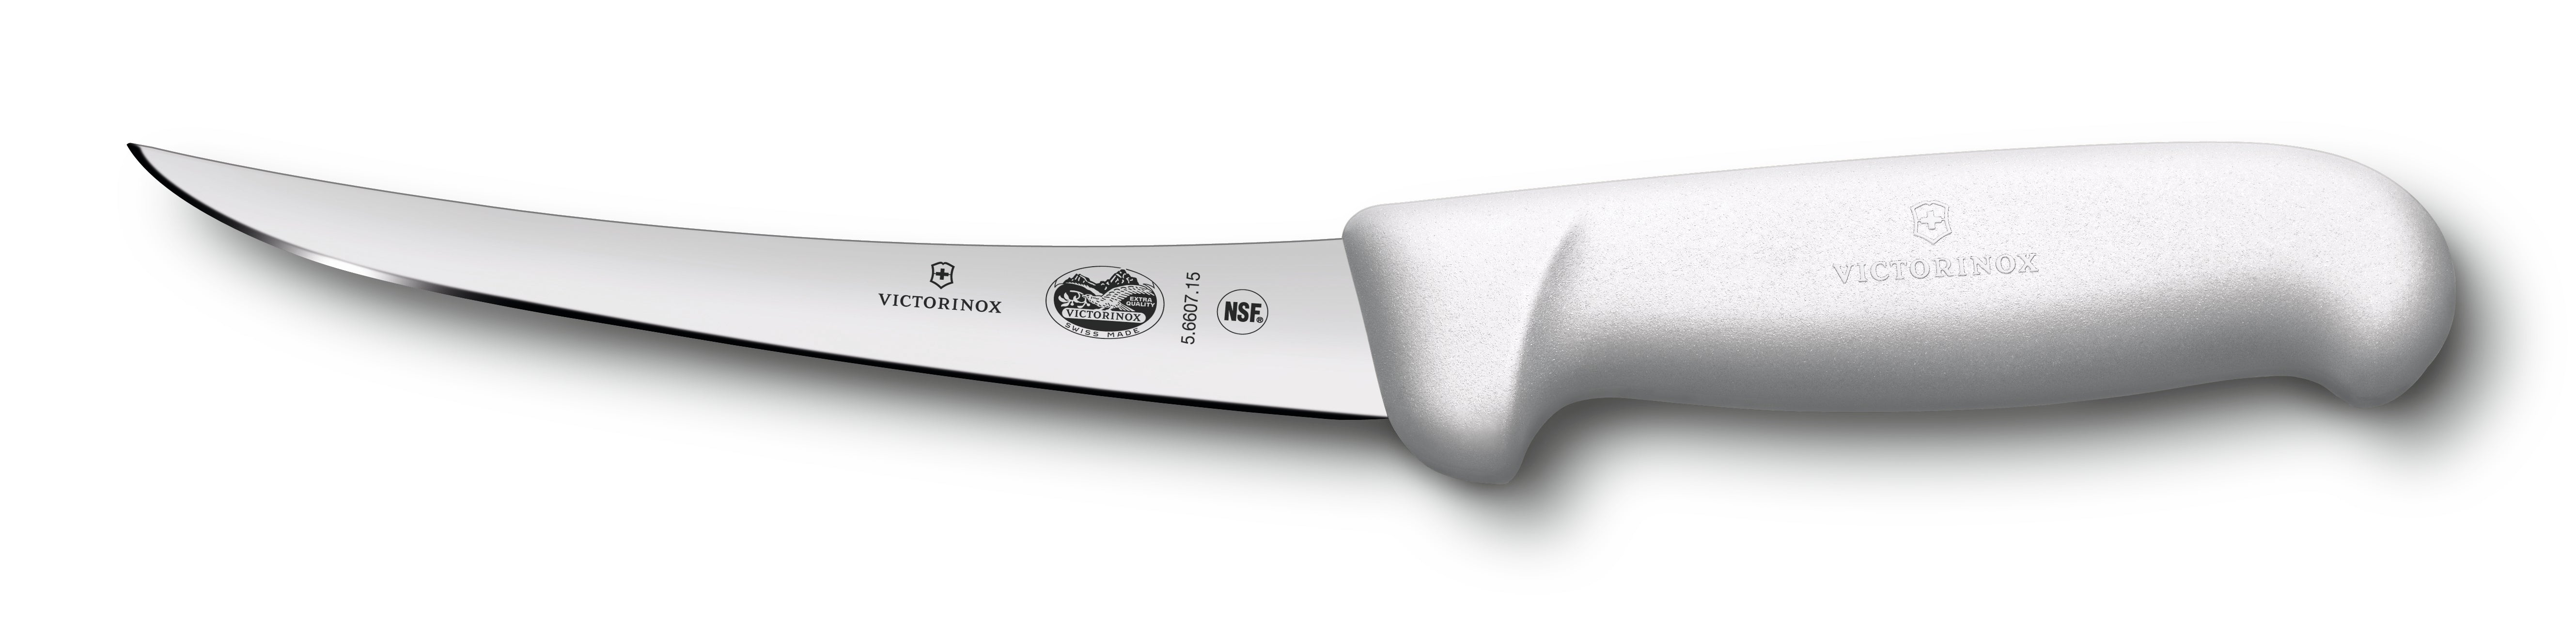 Victorinox Fibrox Boning Knife Curved Narrow Blade 15cm - White